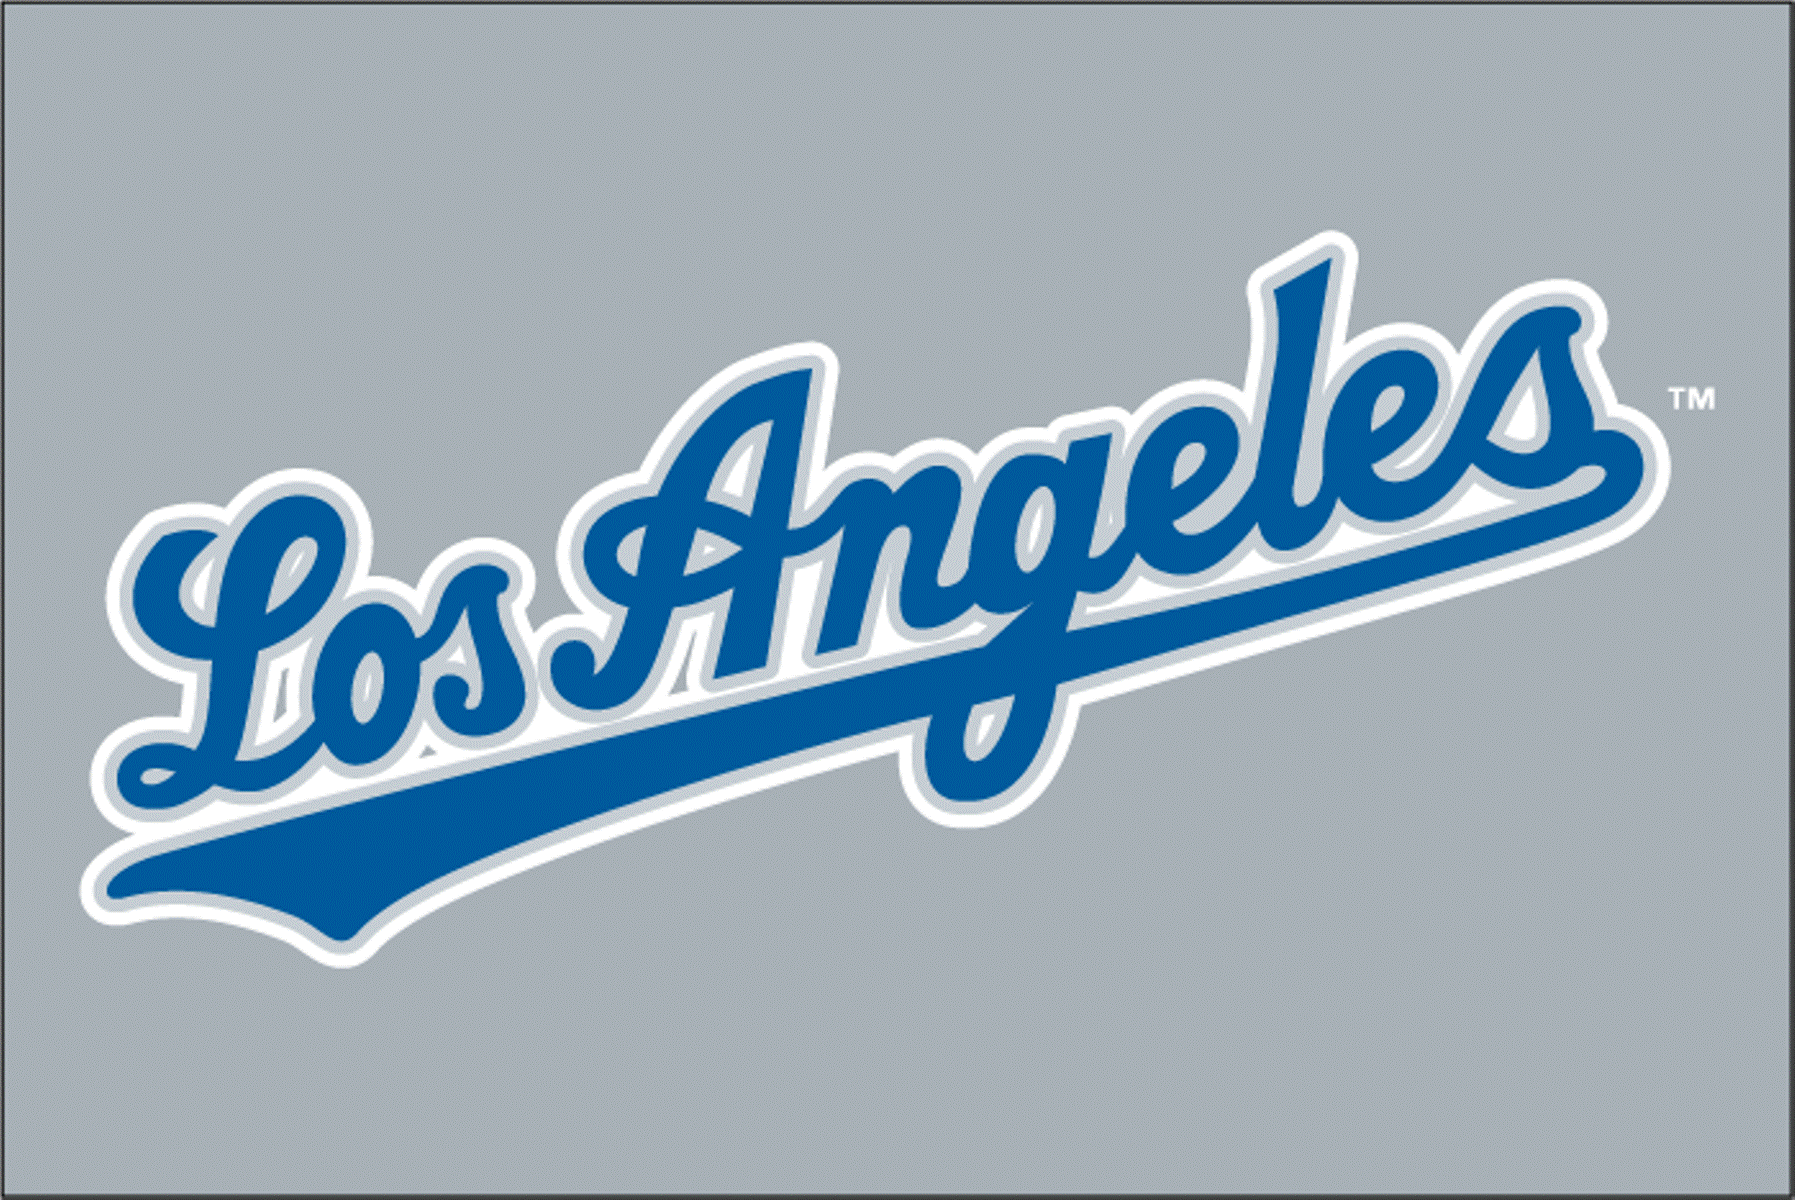 Los angeles dodgers. Эмблема Доджерс. Los Angeles логотип. Лос-Анджелес Доджерс эмблема. Лос Анджелес надпись.